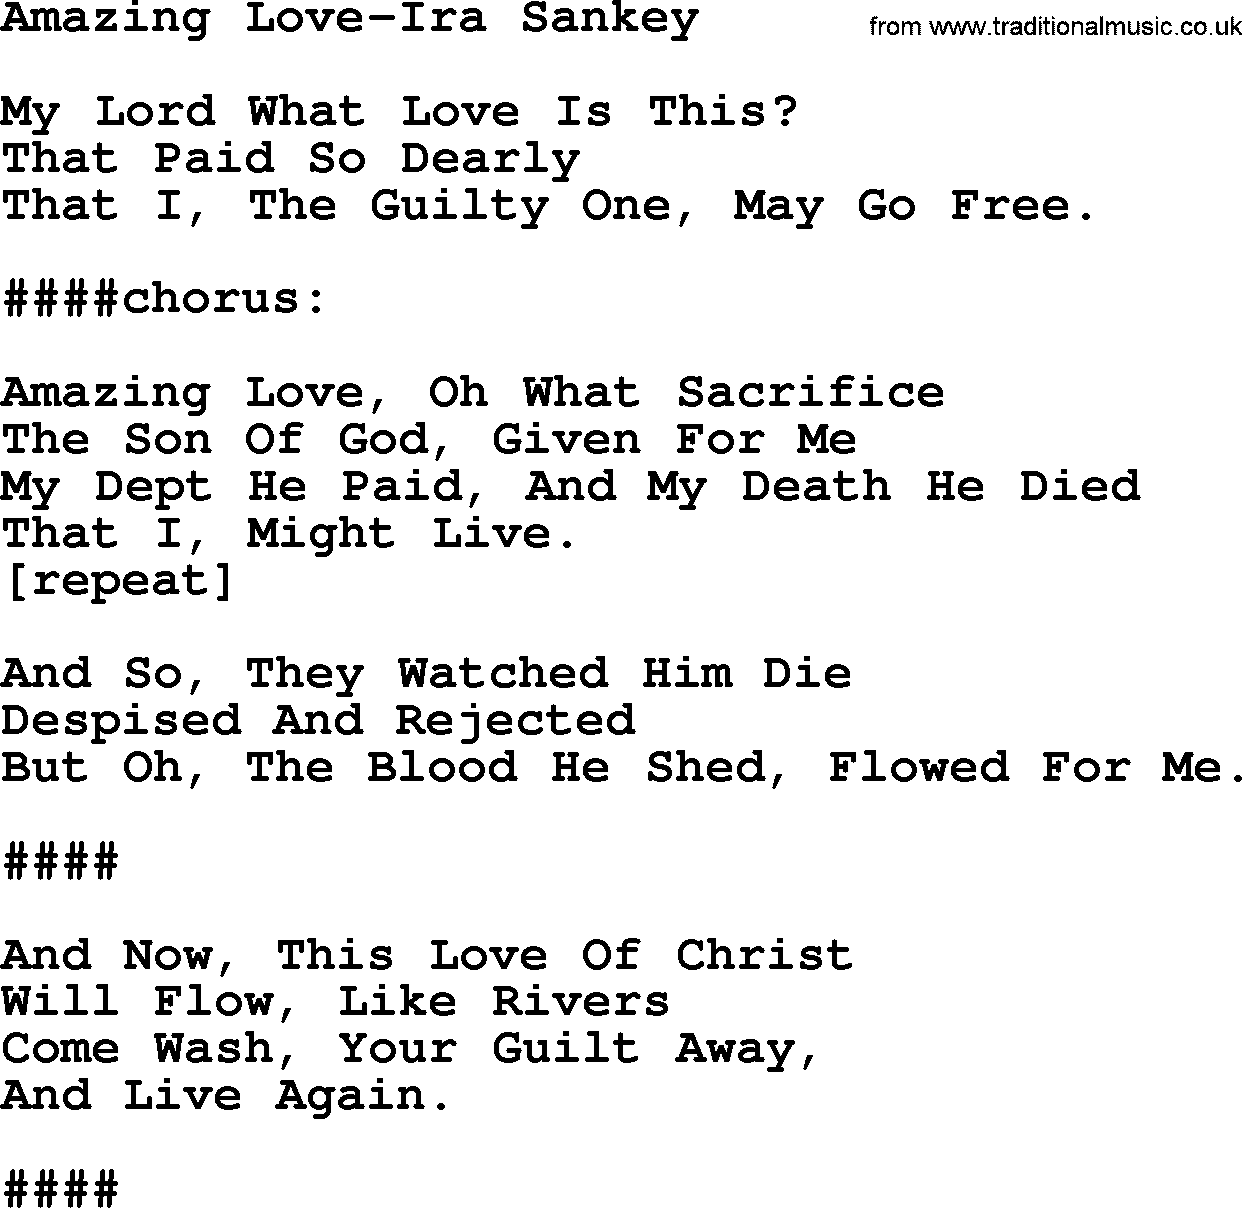 Ira Sankey hymn: Amazing Love-Ira Sankey, lyrics